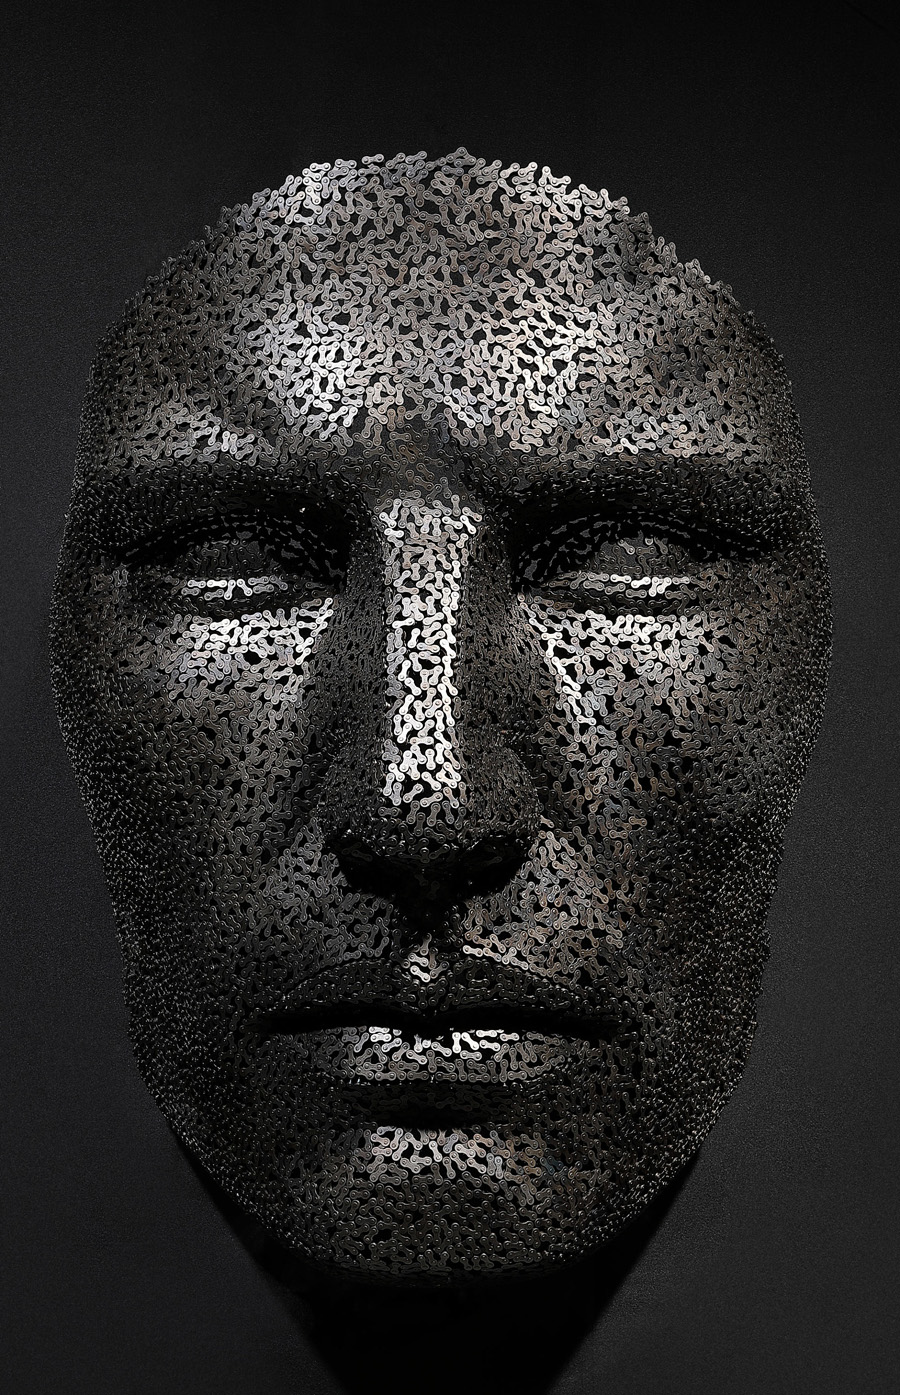 metal face sculpture